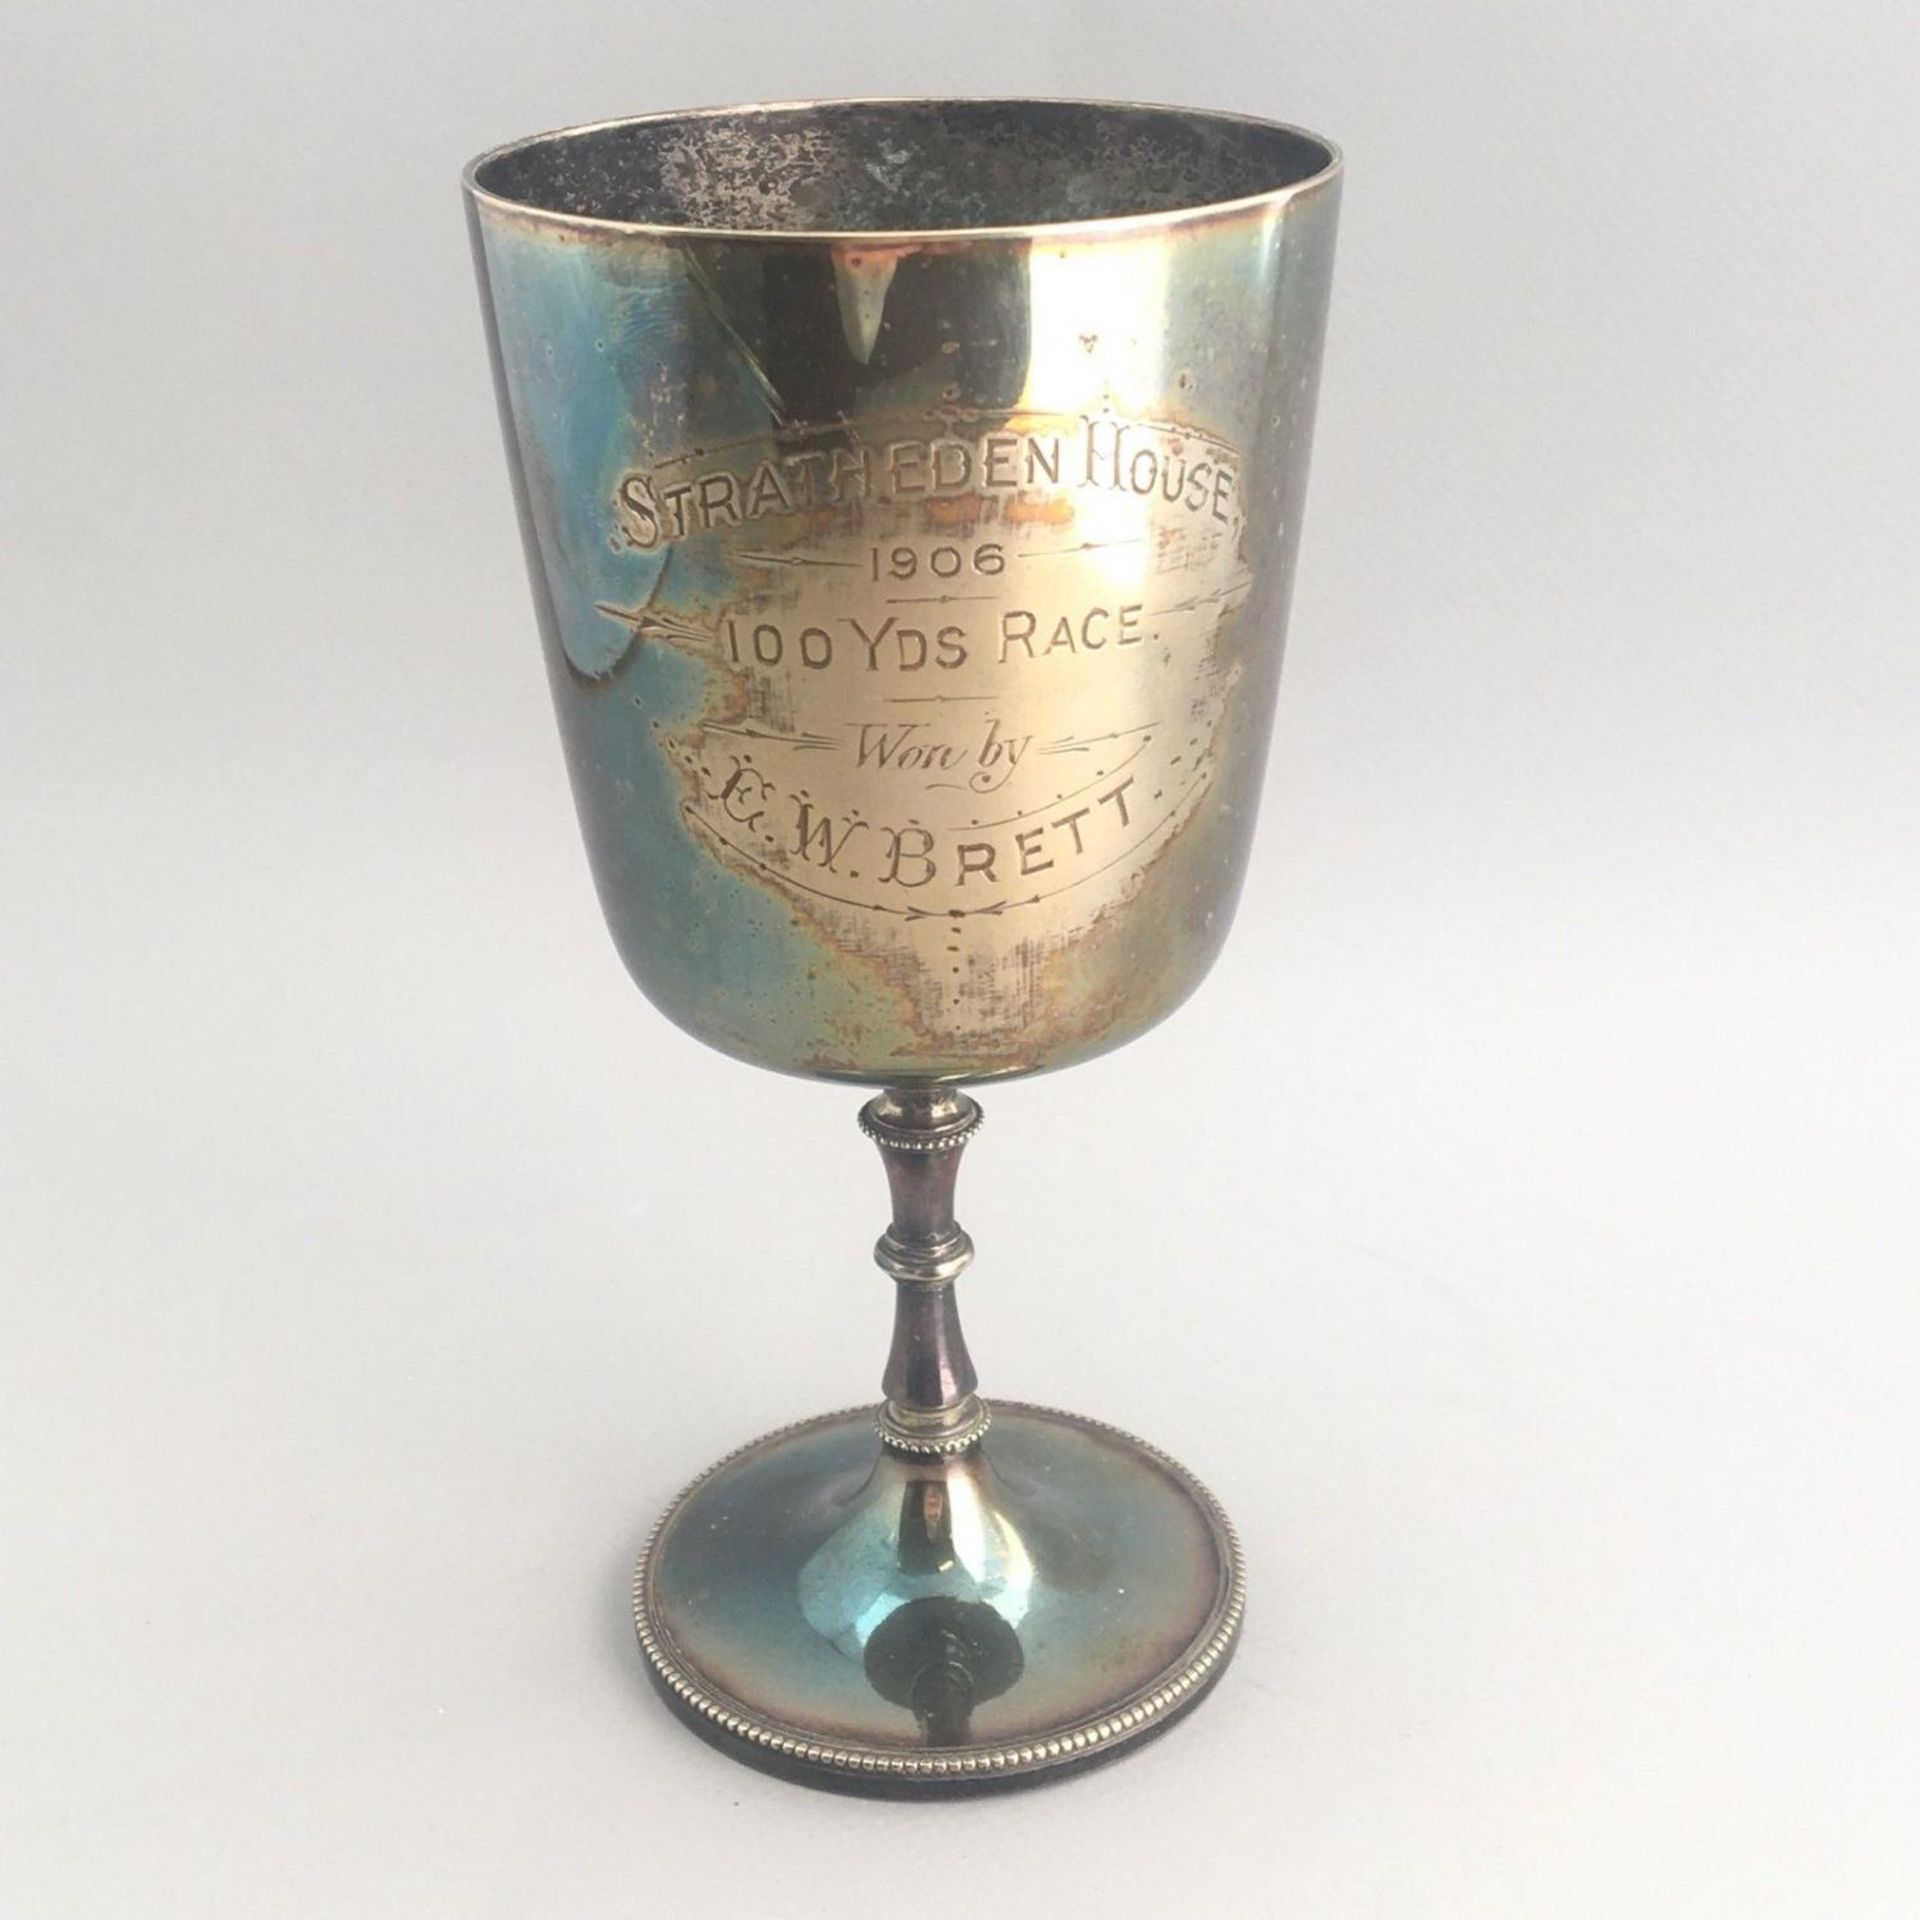 Antique Edwardian English Silver Plated Goblet - Stratheden House - 1906